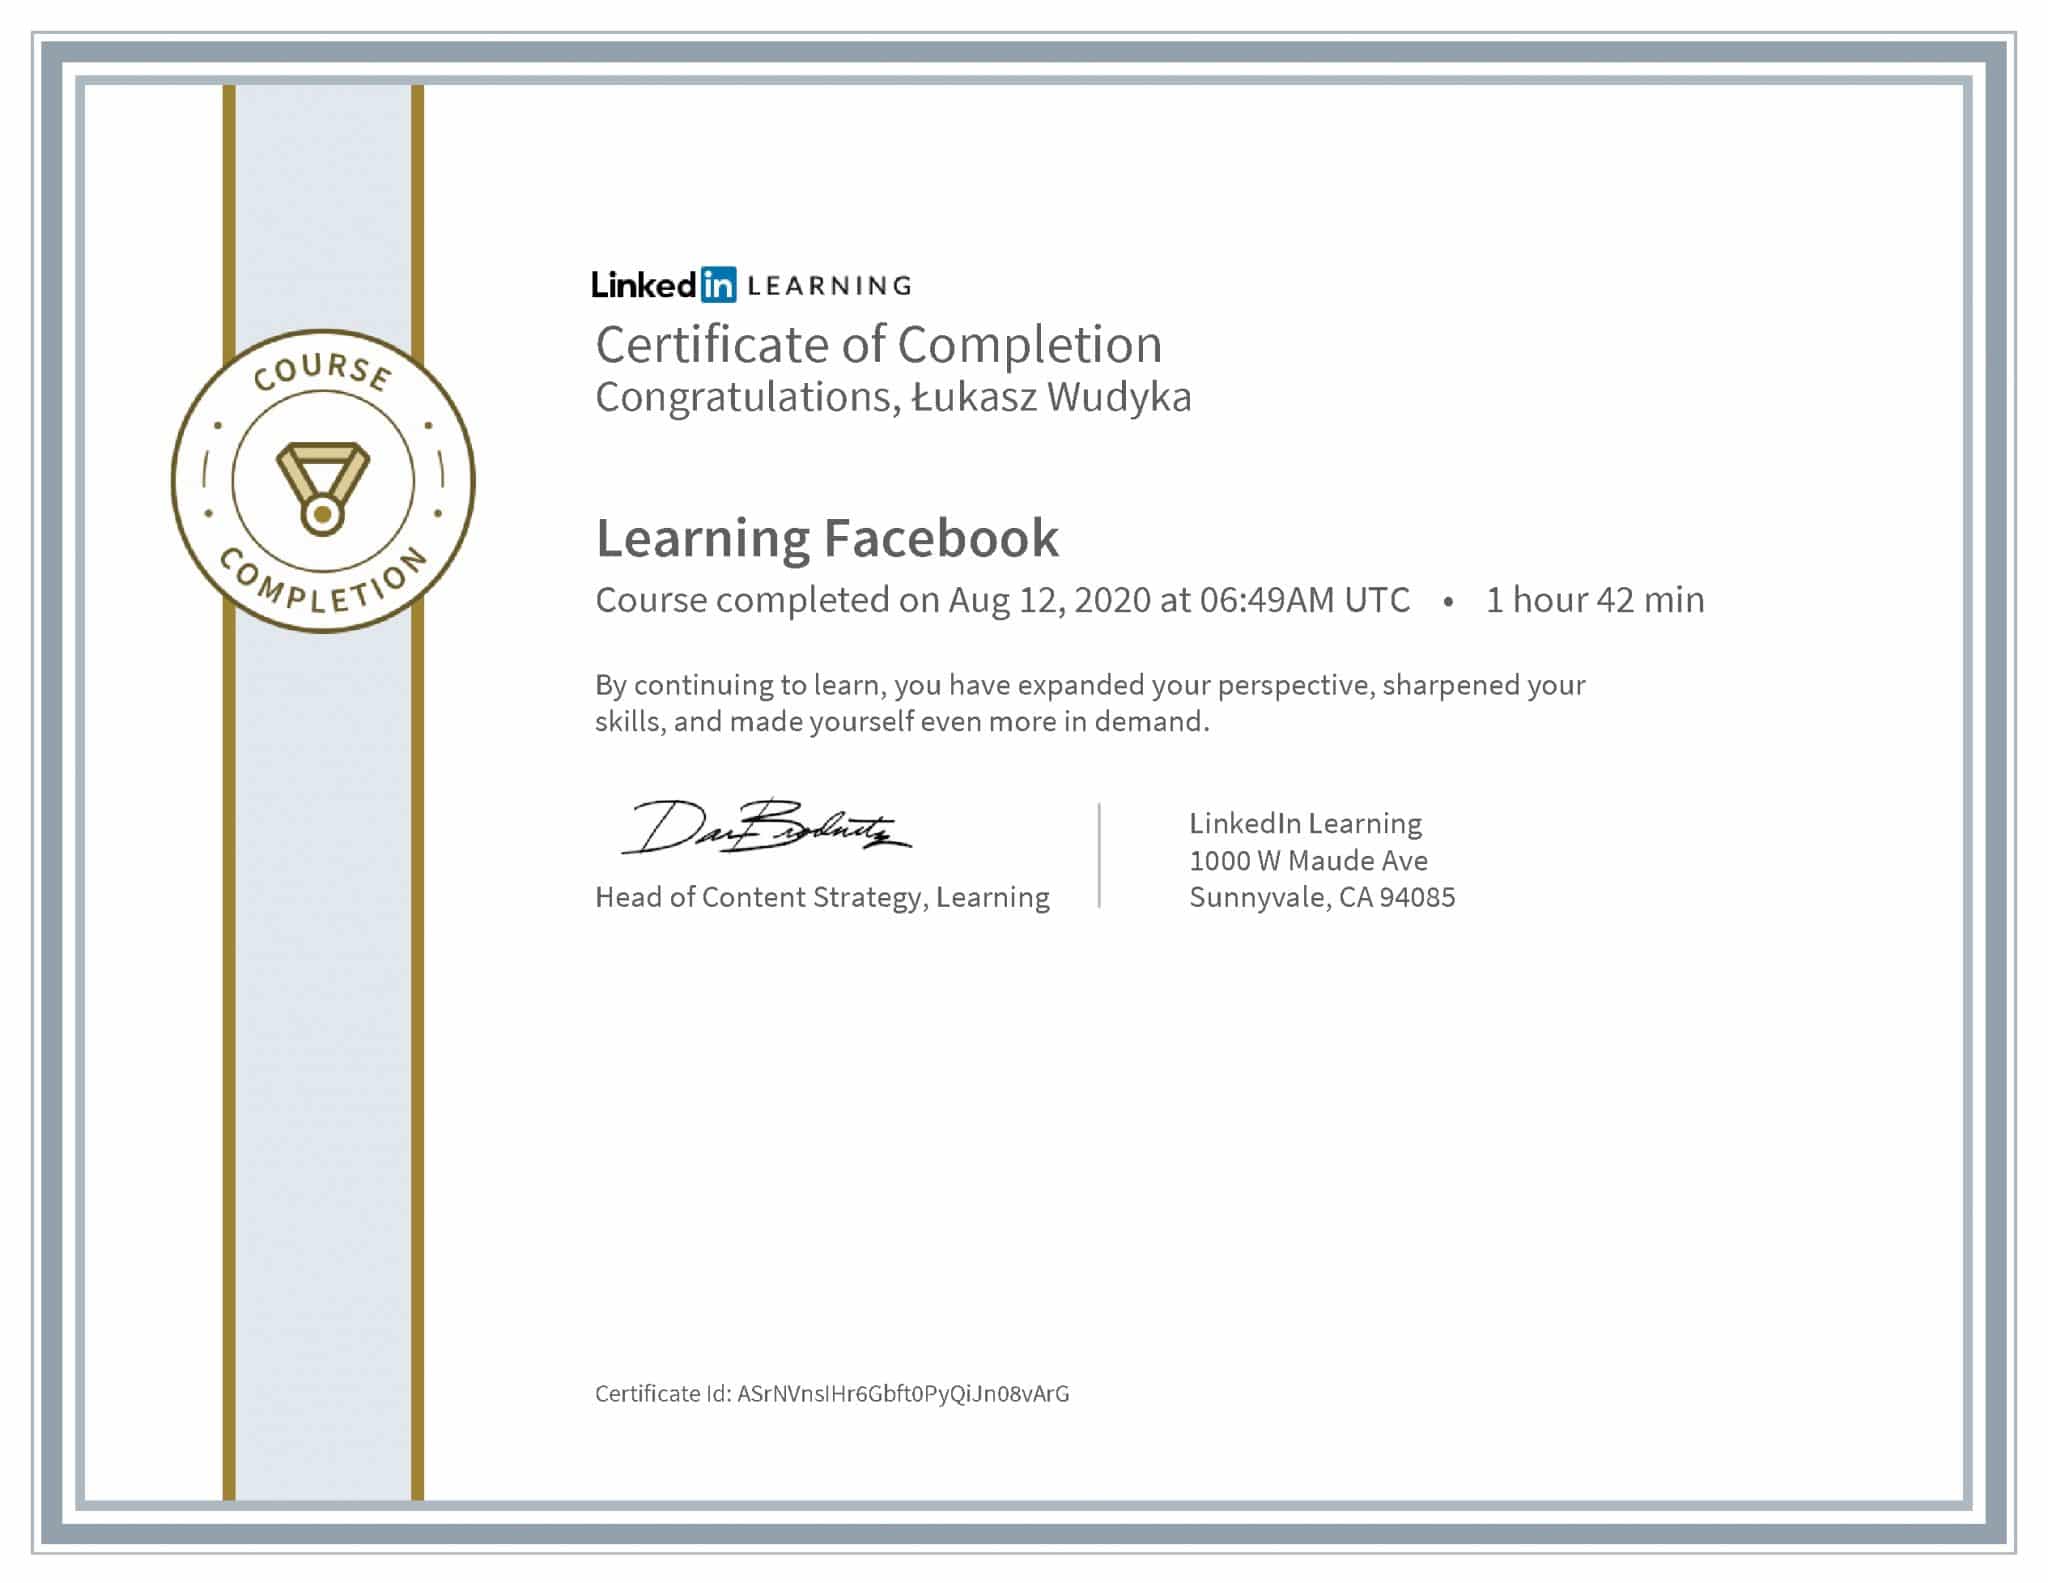 Łukasz Wudyka certyfikat LinkedIn Learning Facebook